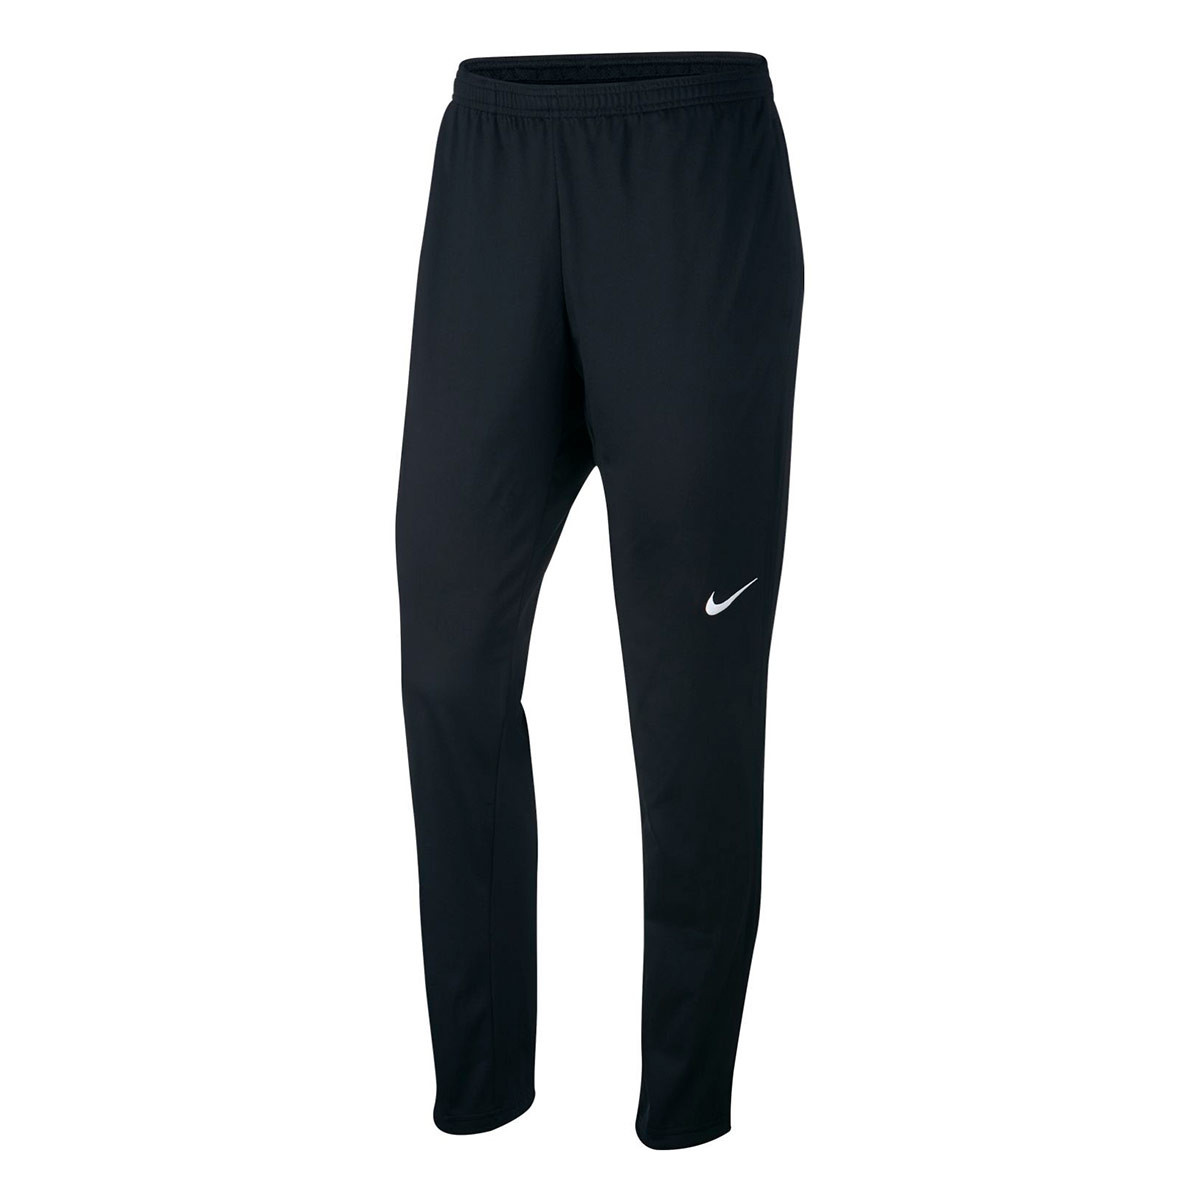 Long pants Nike Woman Dry Academy 18 